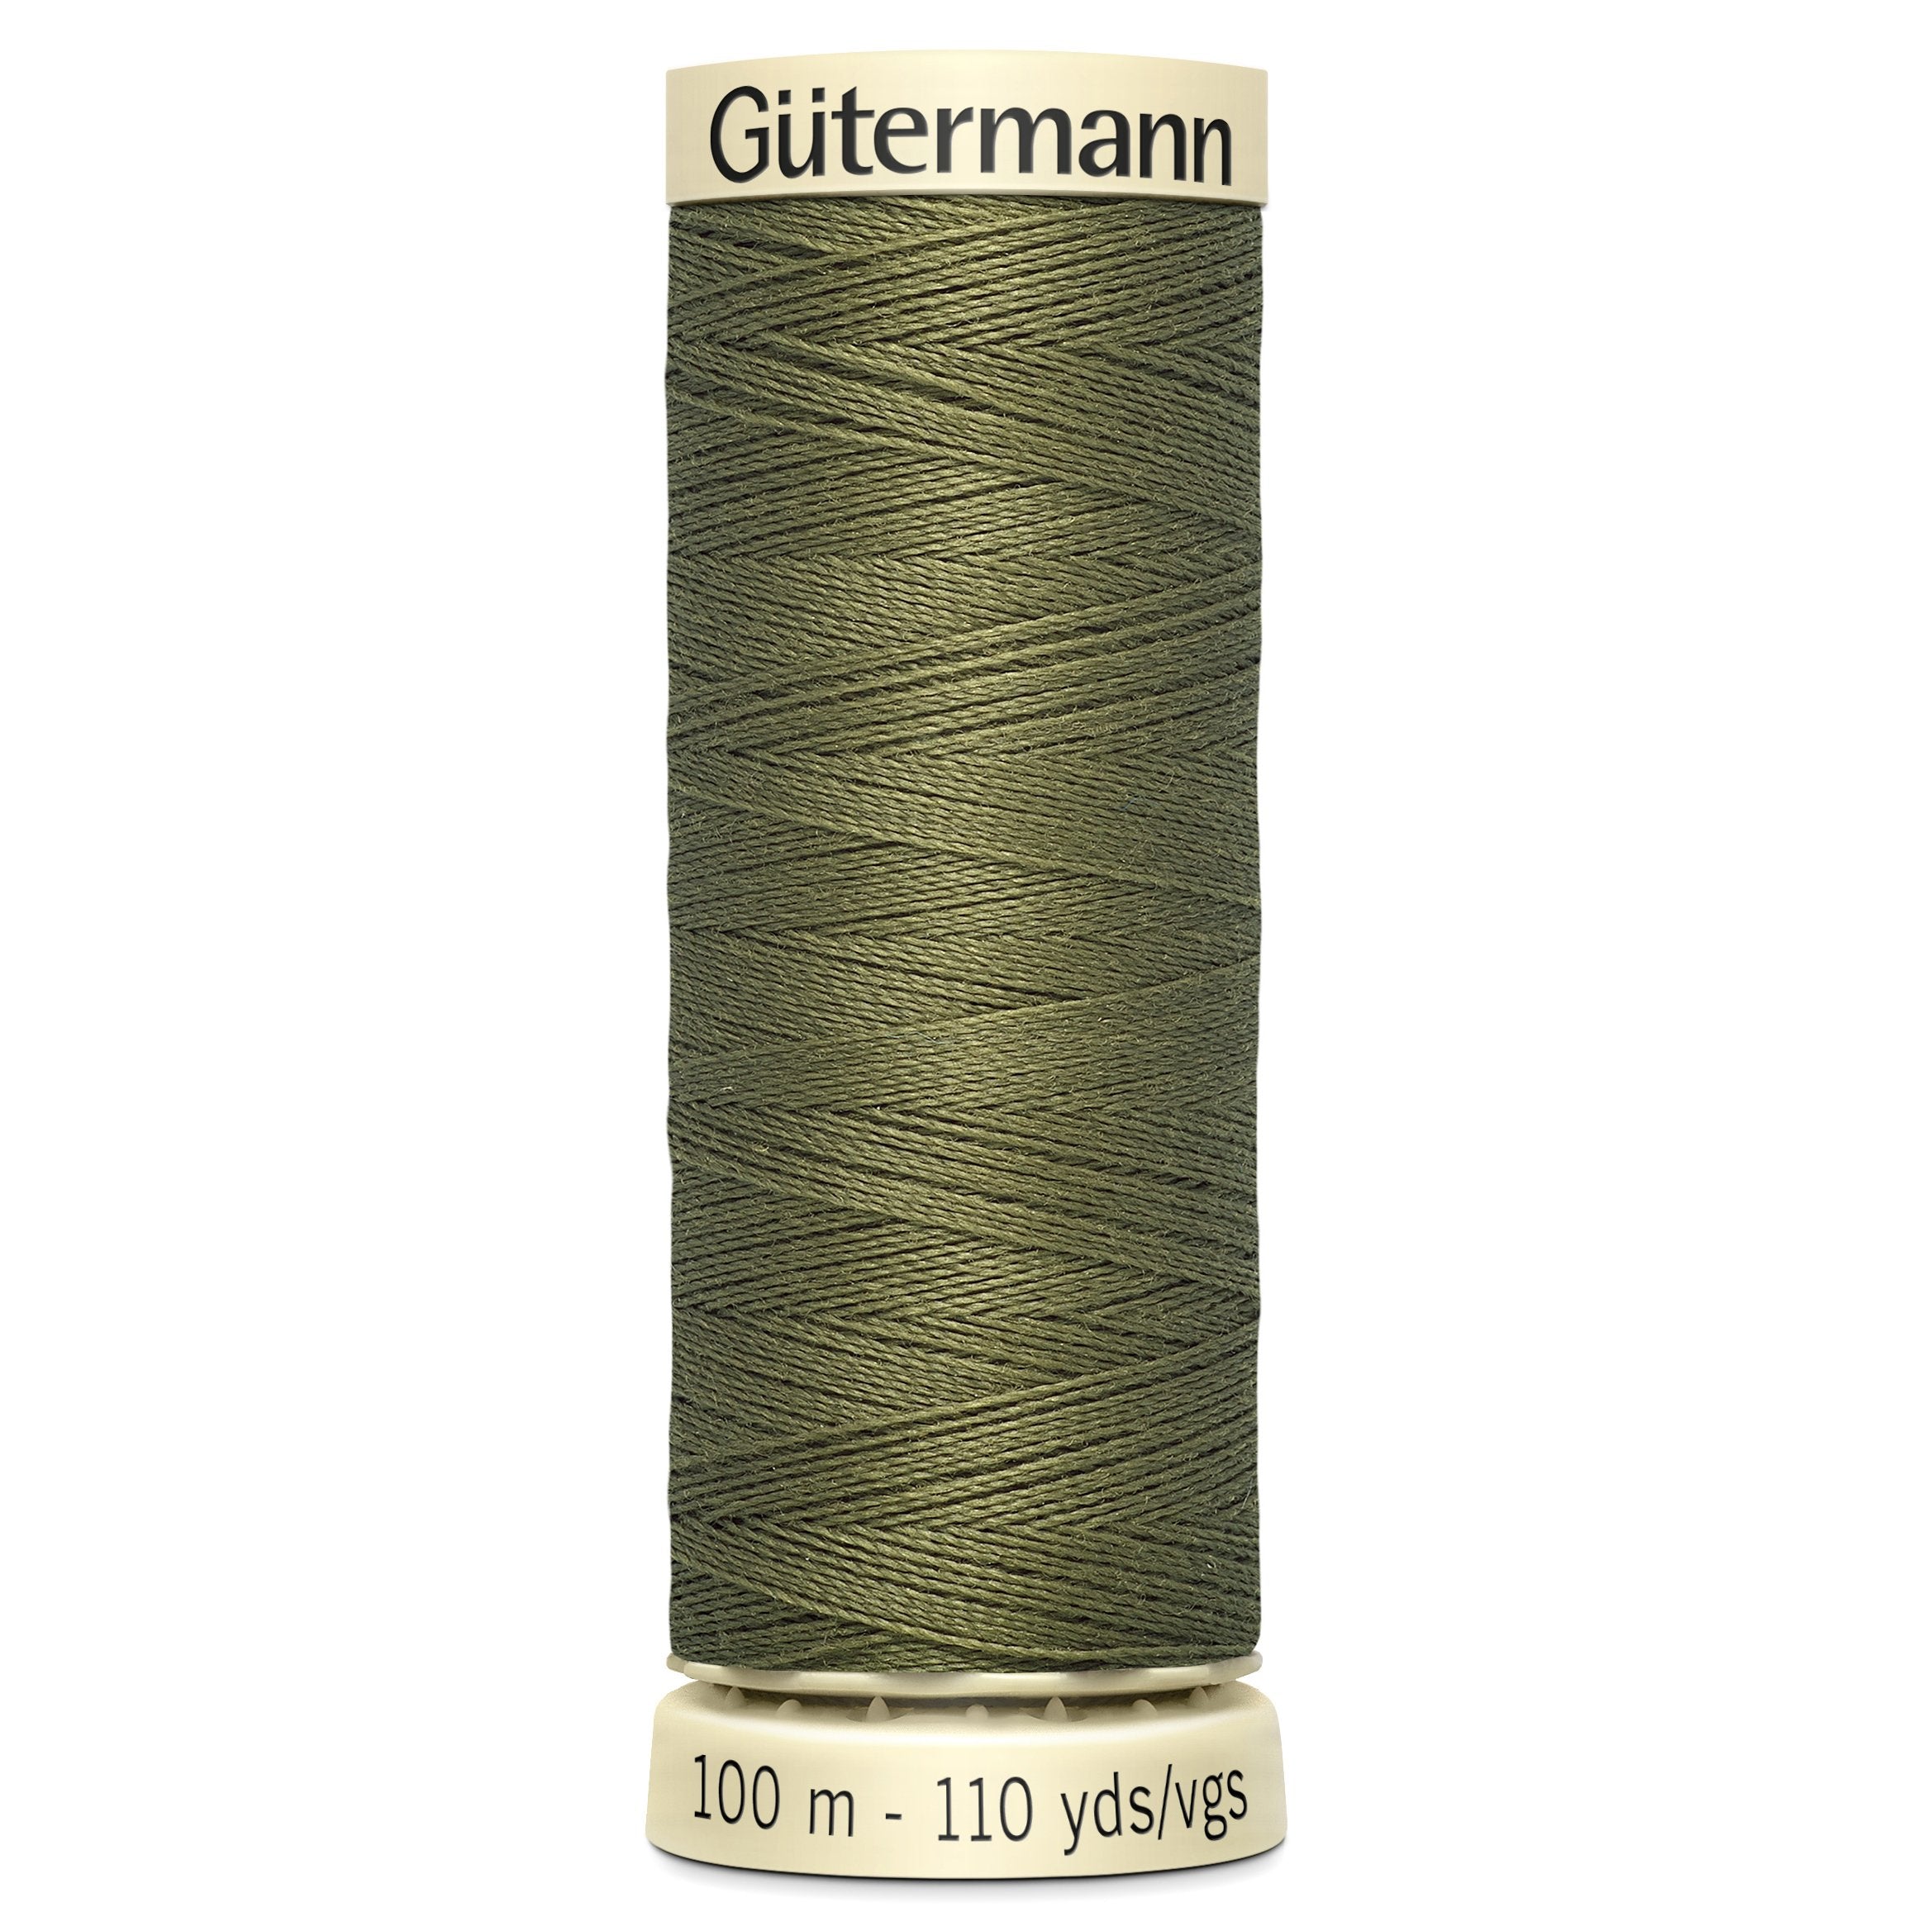 Gutermann Sew All Thread colour 432 Dark Khaki from Jaycotts Sewing Supplies